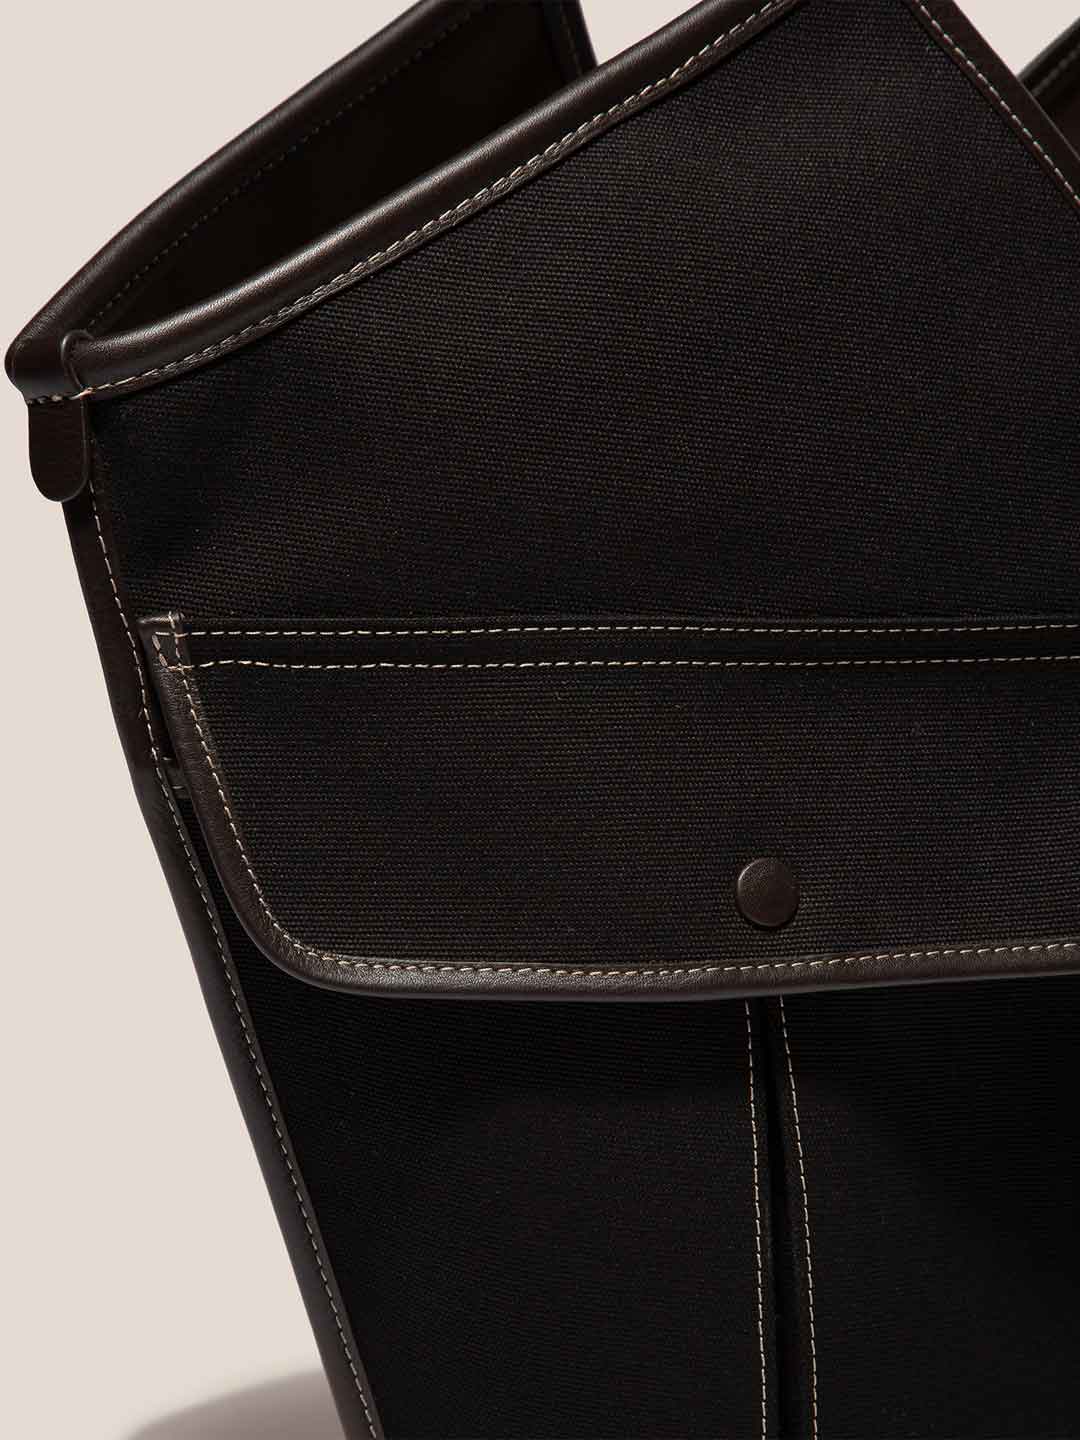 DUNA - Leather-trimmed Organic Cotton Tote Bag - Black/Dark Brown